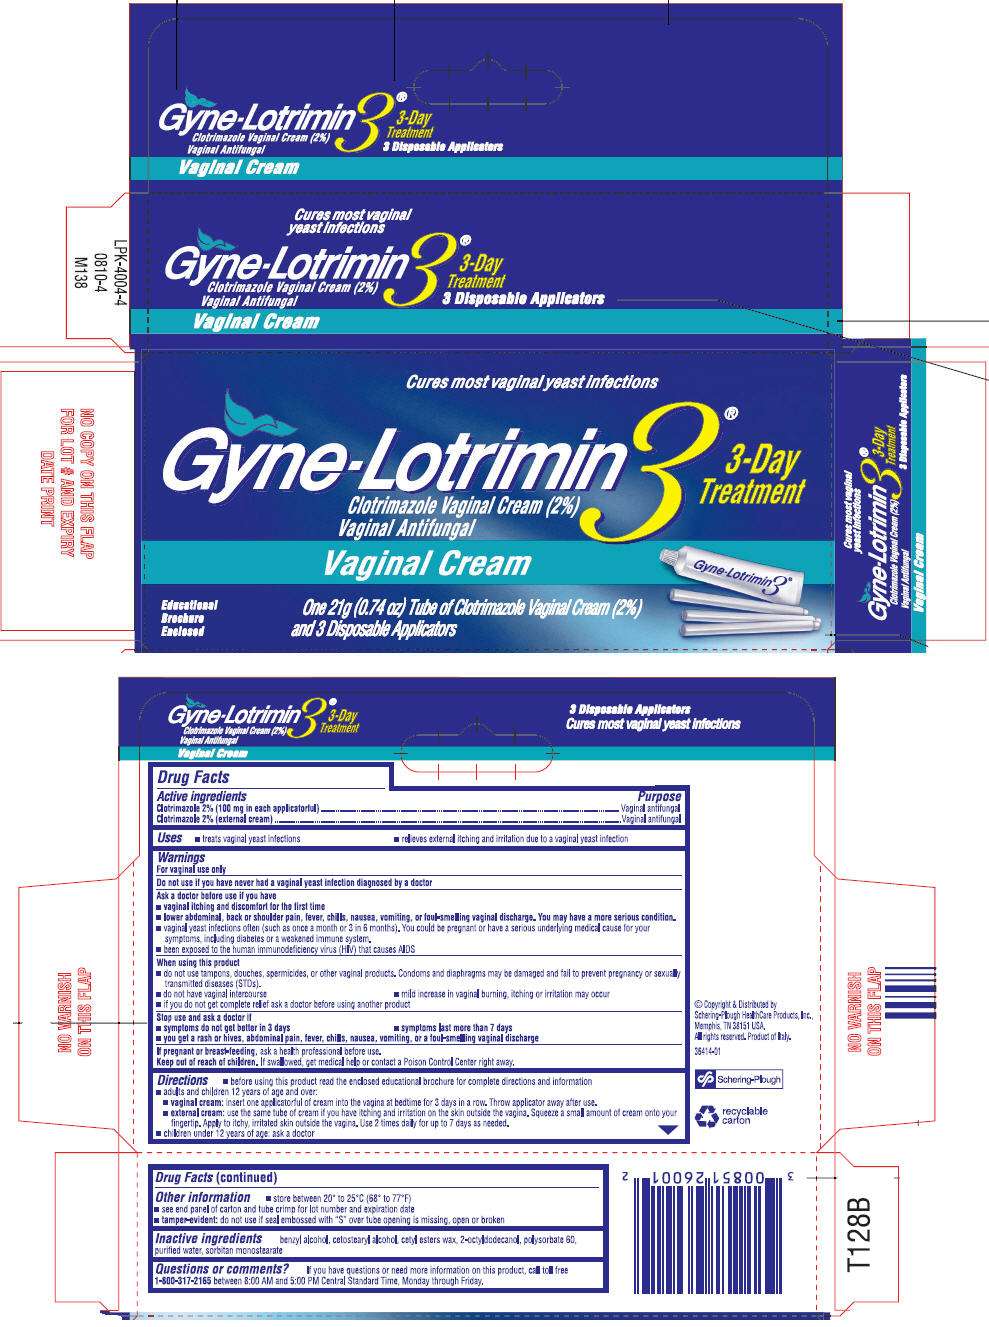 Gyne-Lotrimin 3